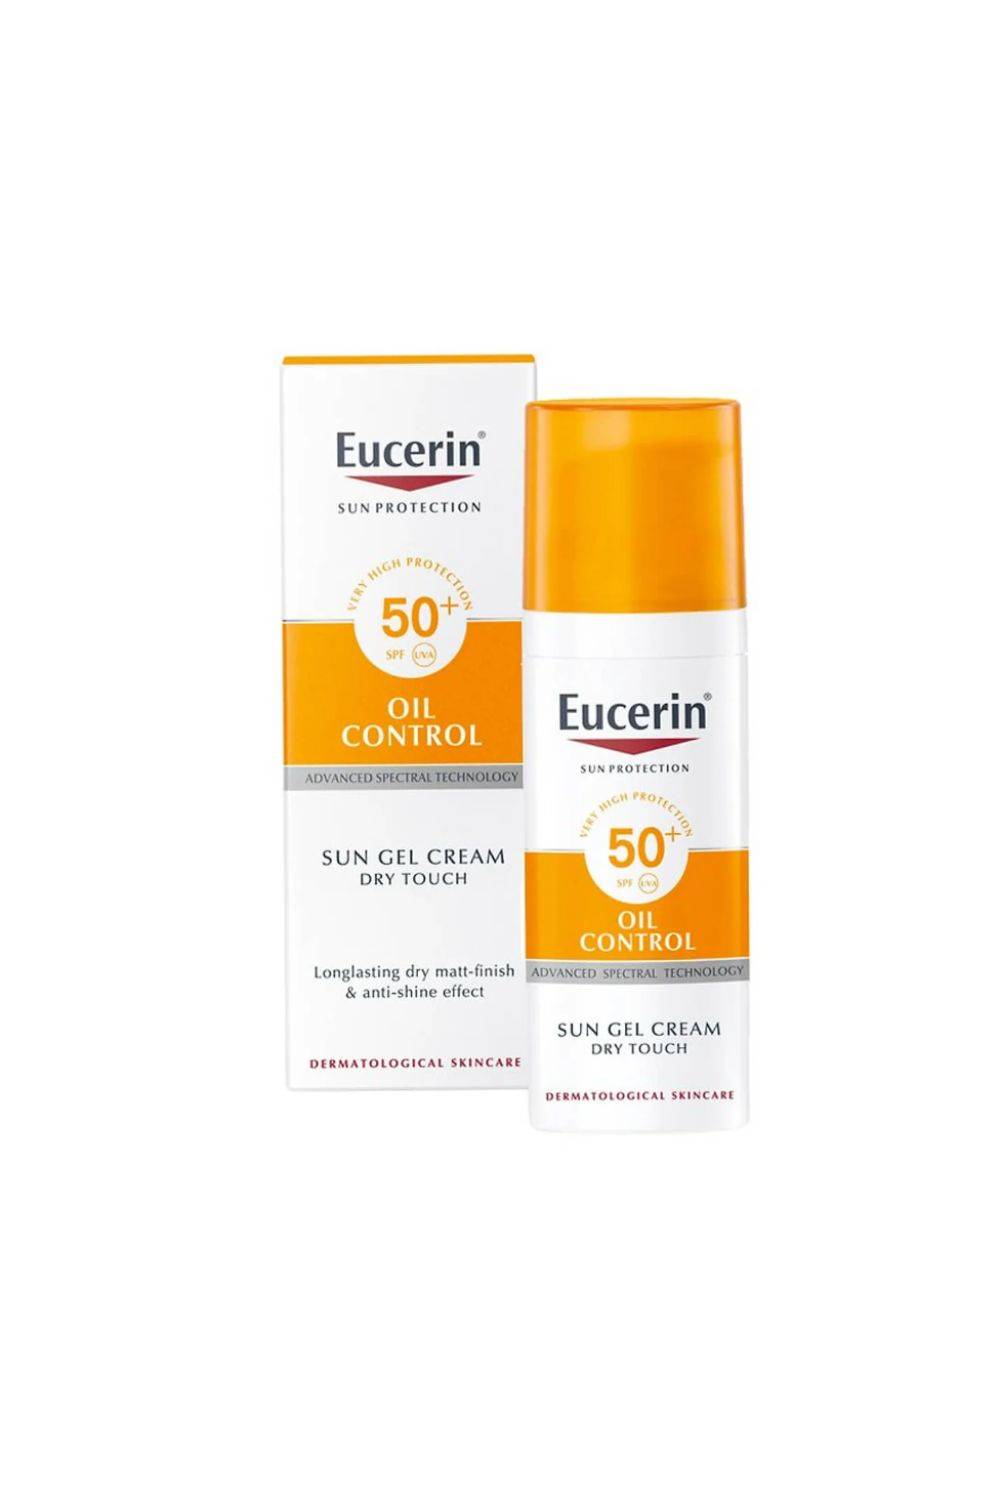 Eucerin Sun Gel Crema Oil Control Dry Touch SPF50+ 50ml